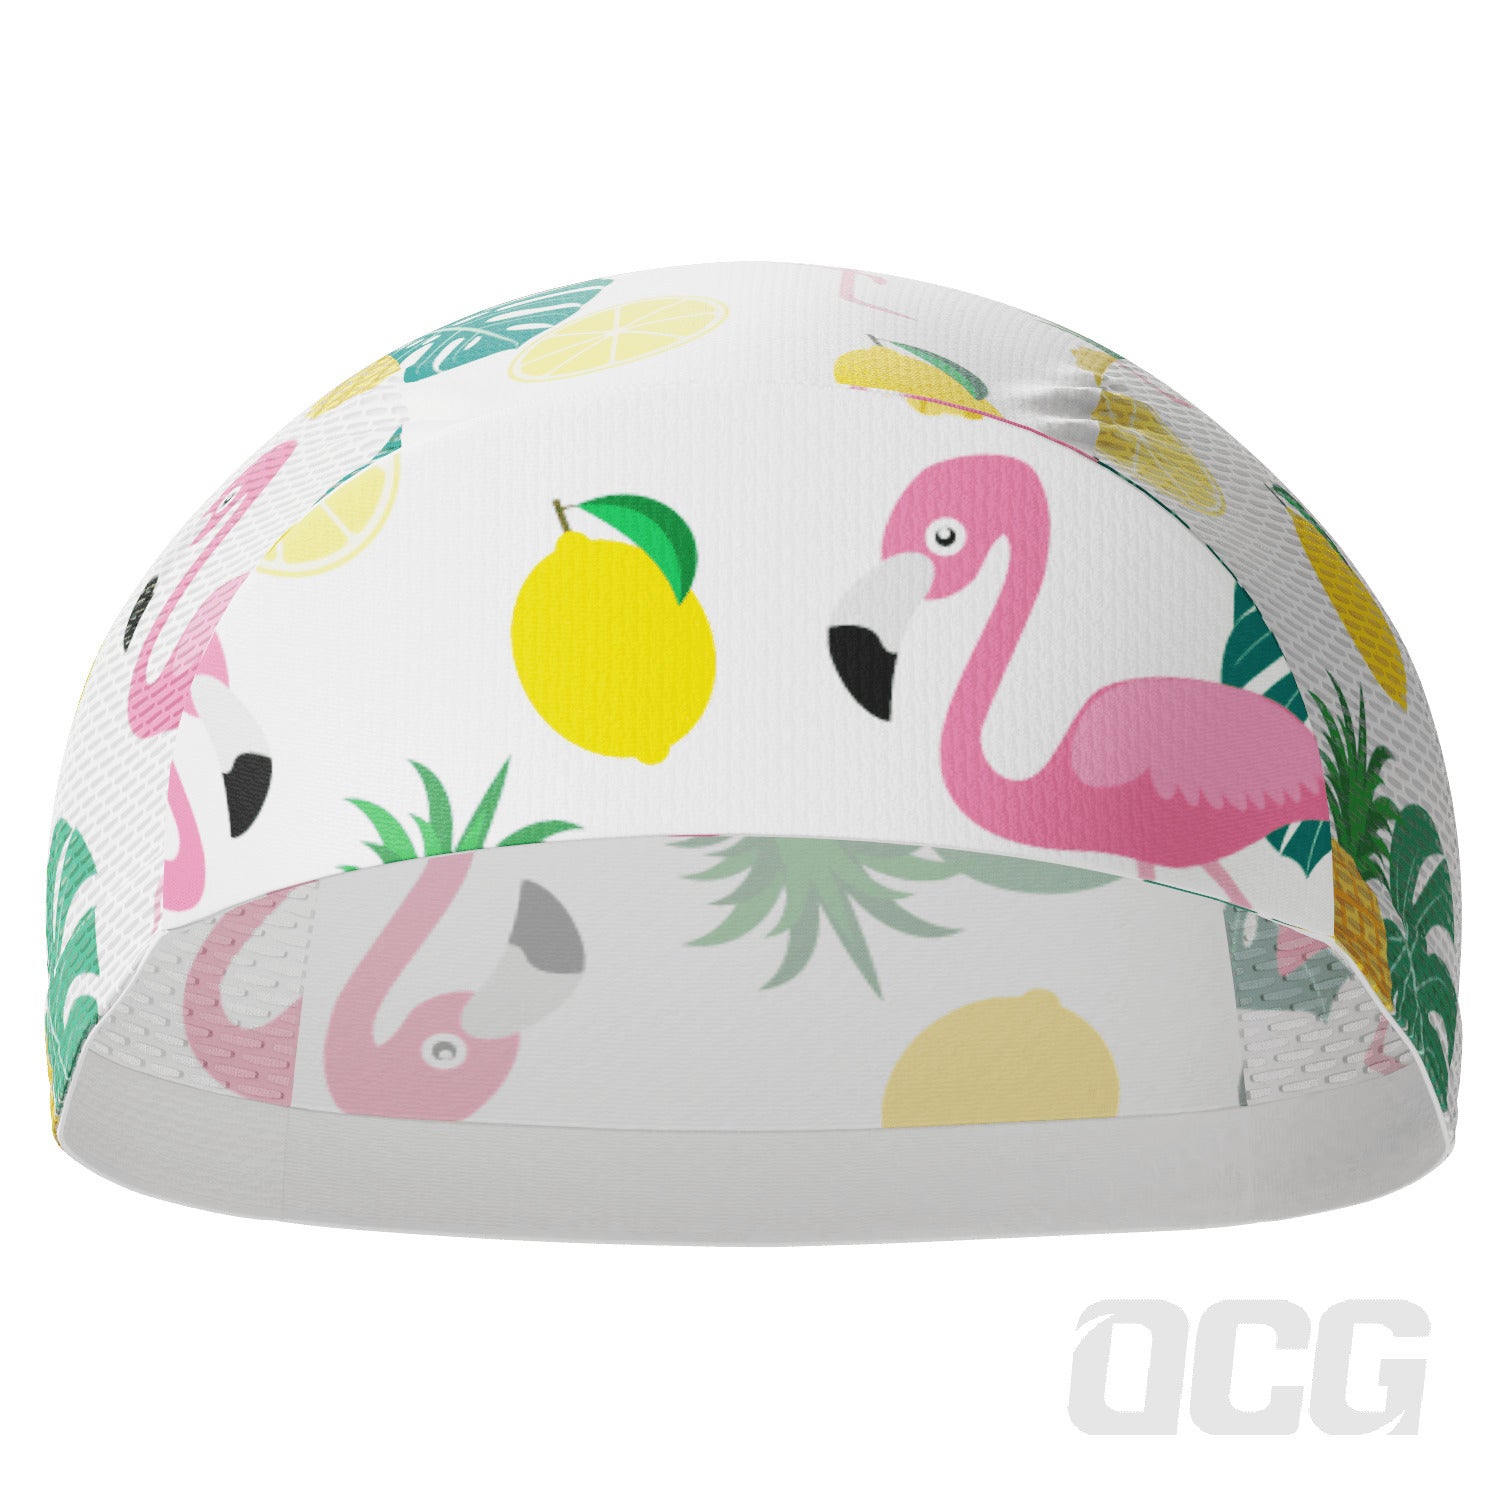 Unisex Fruity Flamingo Quick-Dry Cycling Cap